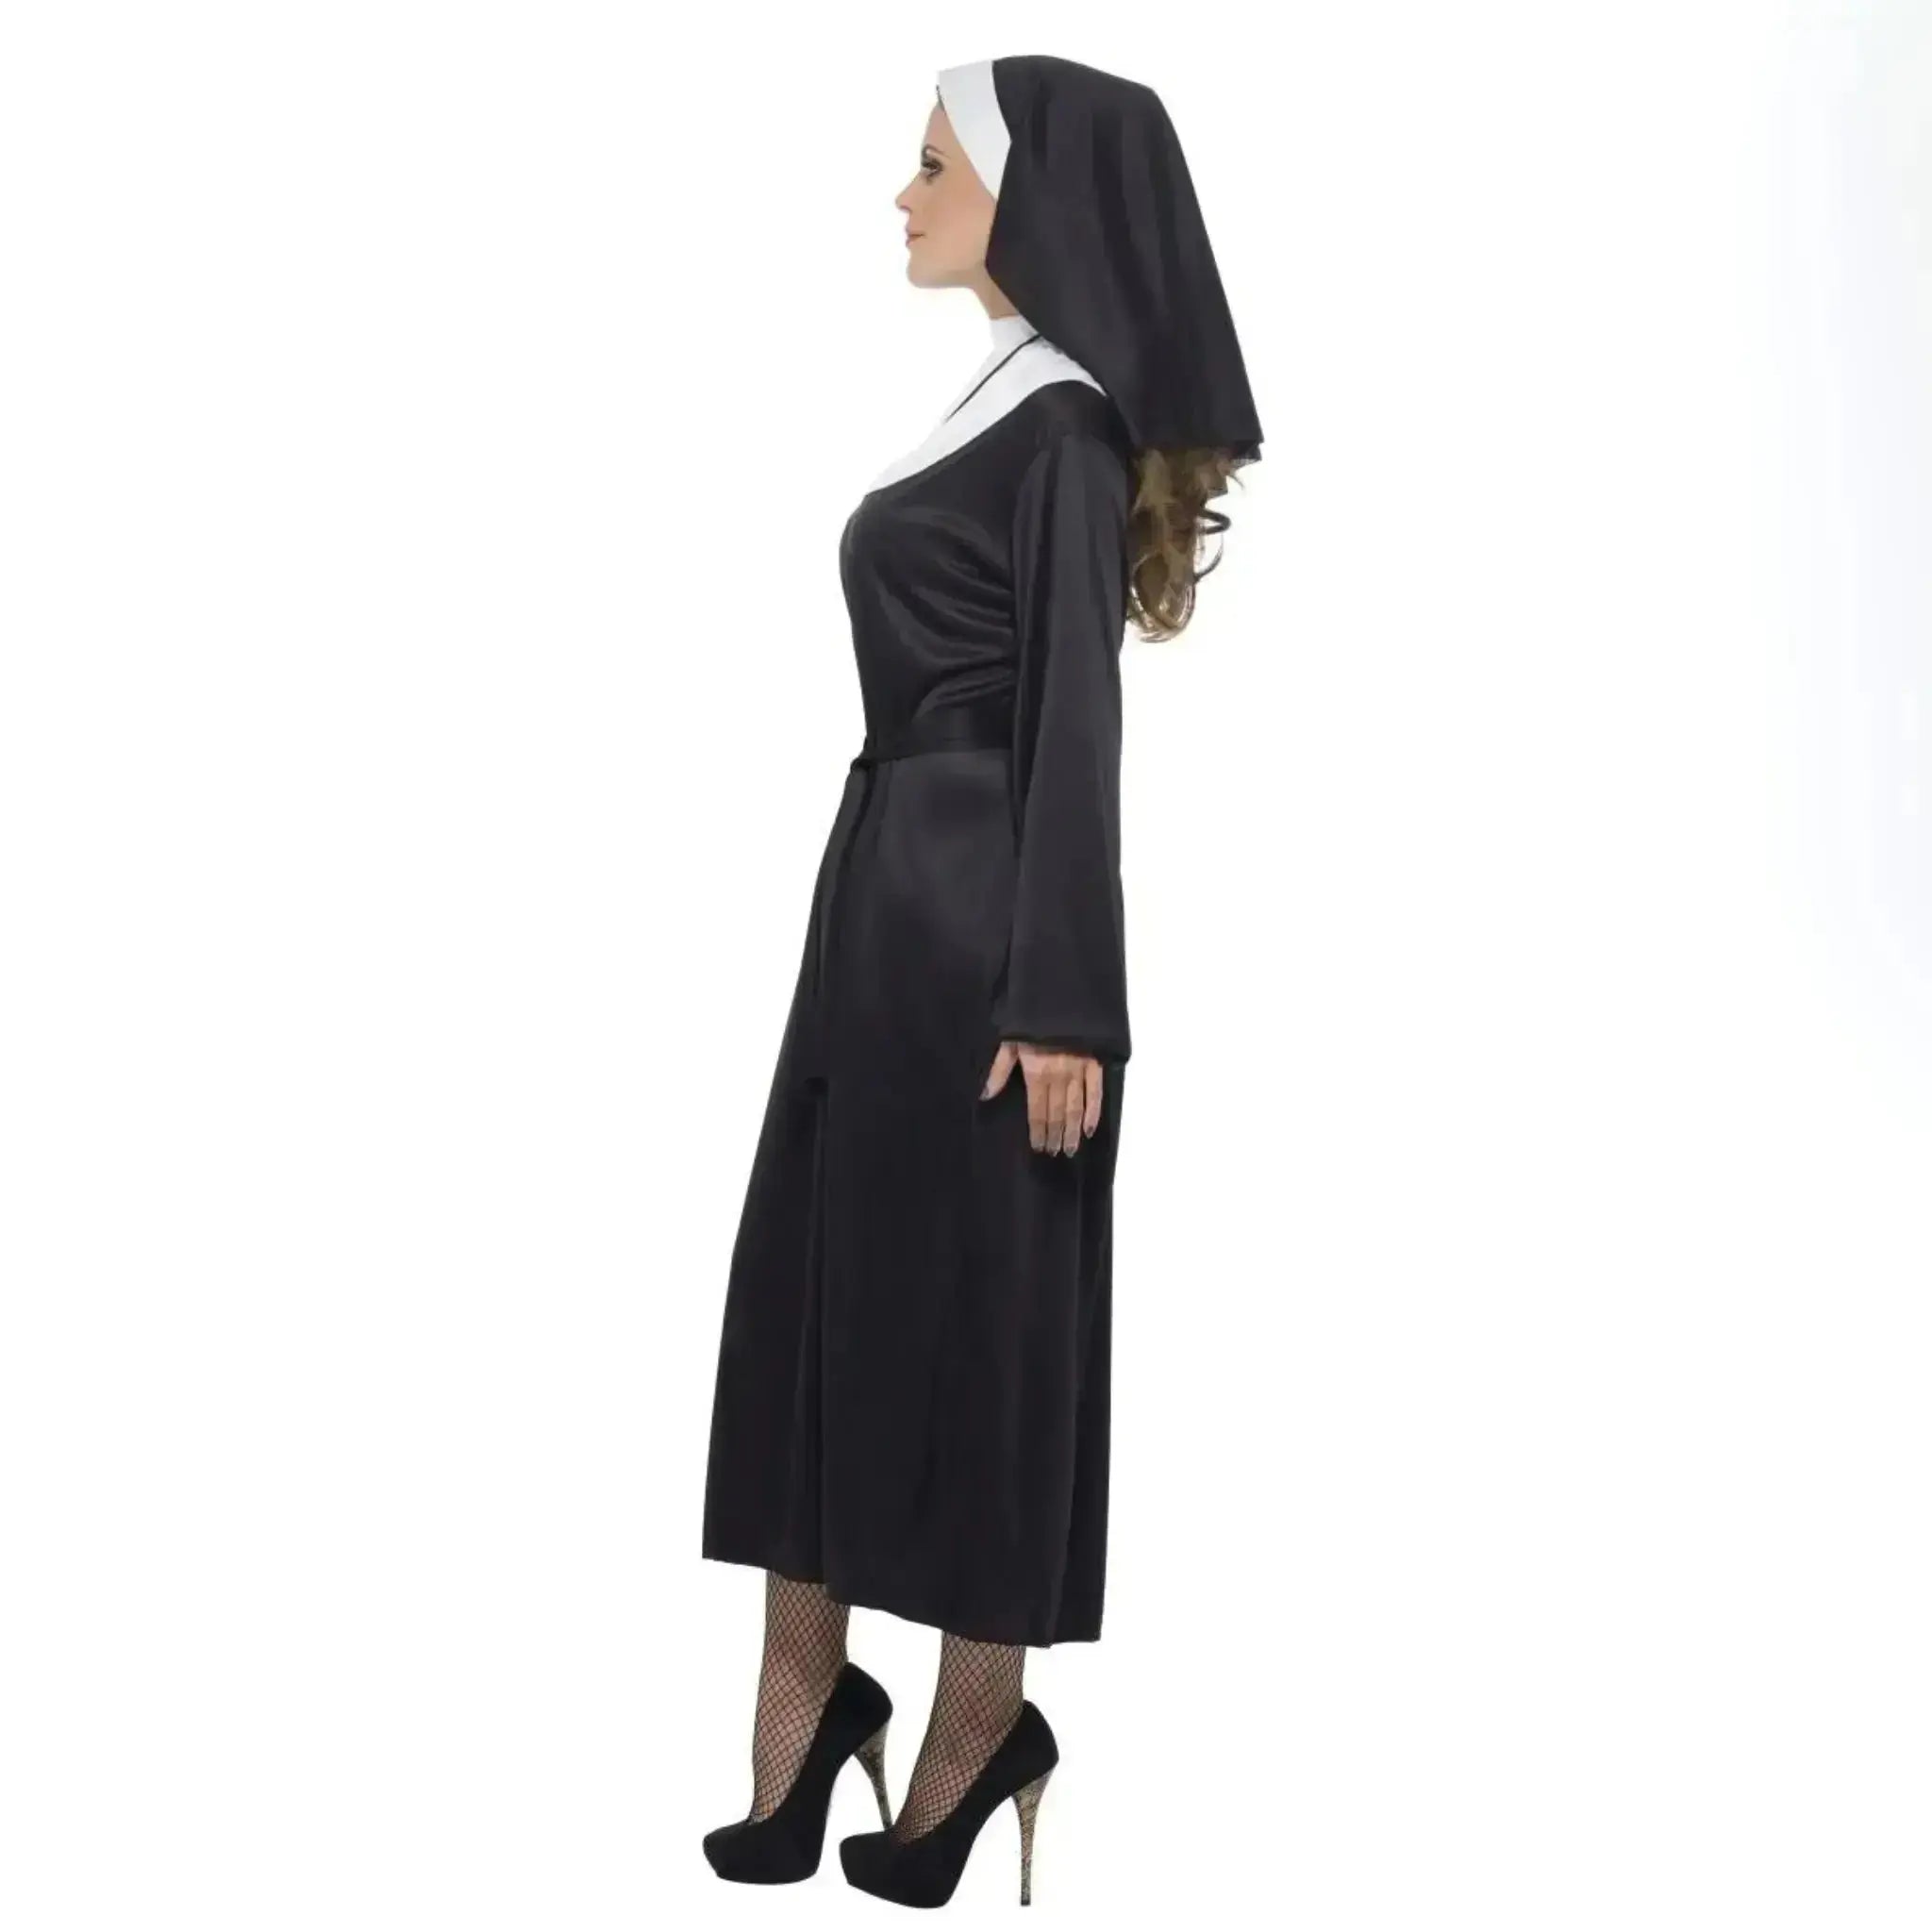 Nun Costume | The Party Hut